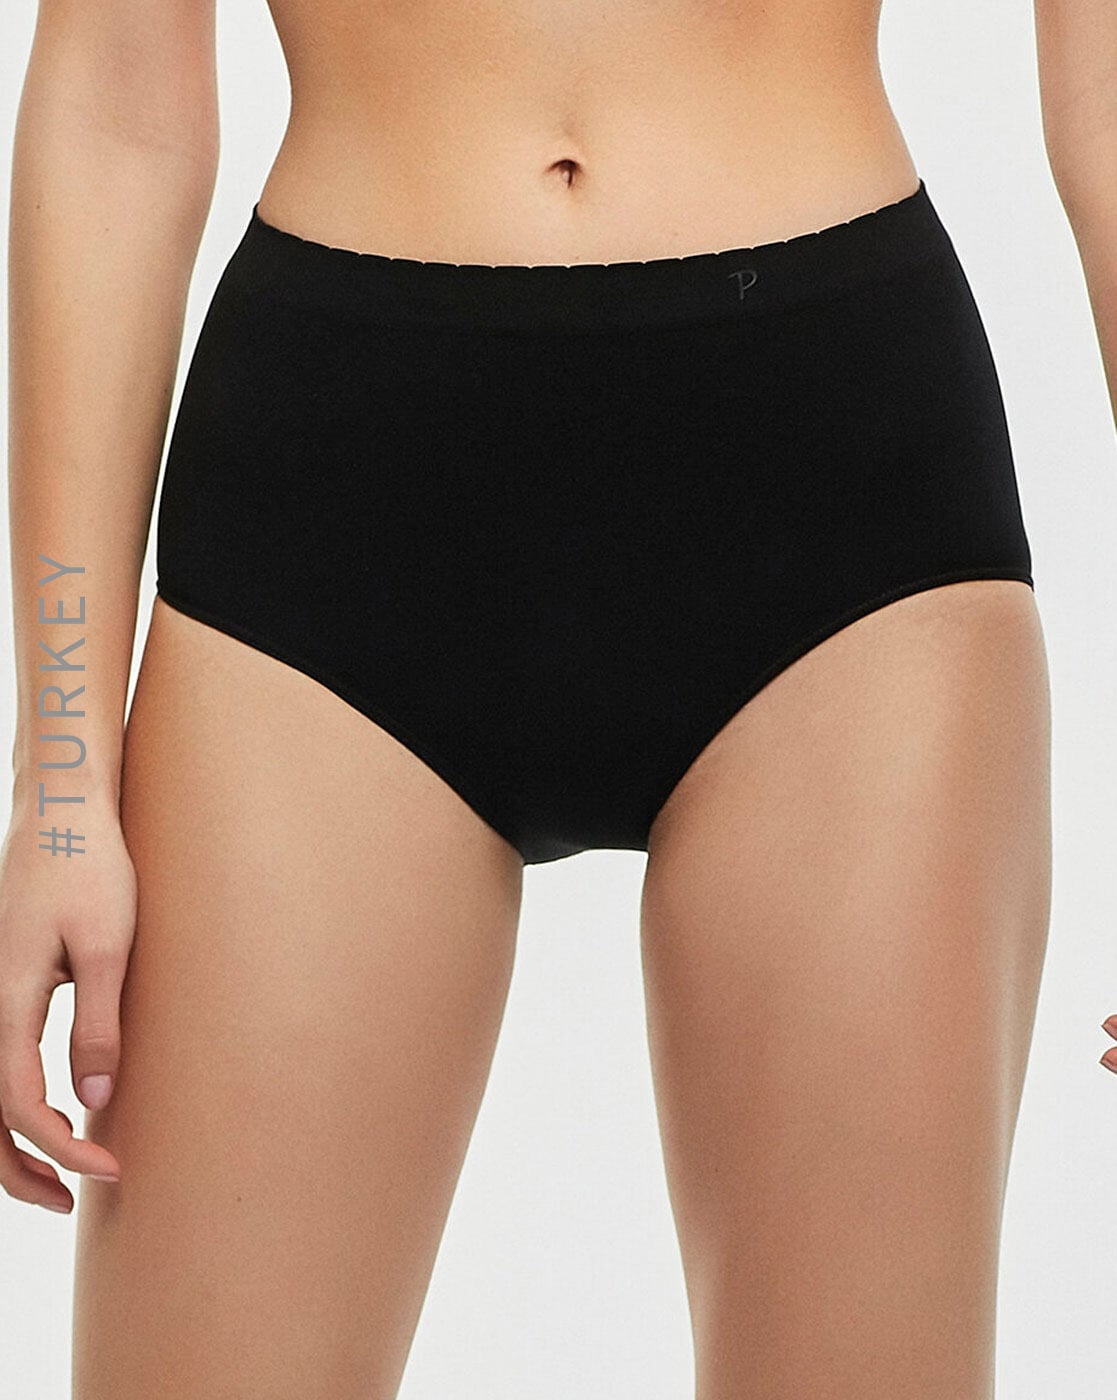 Aayomet Womens Cotton Underwear Lifting Hip Breathable High Elastic Trunks  (B, L)